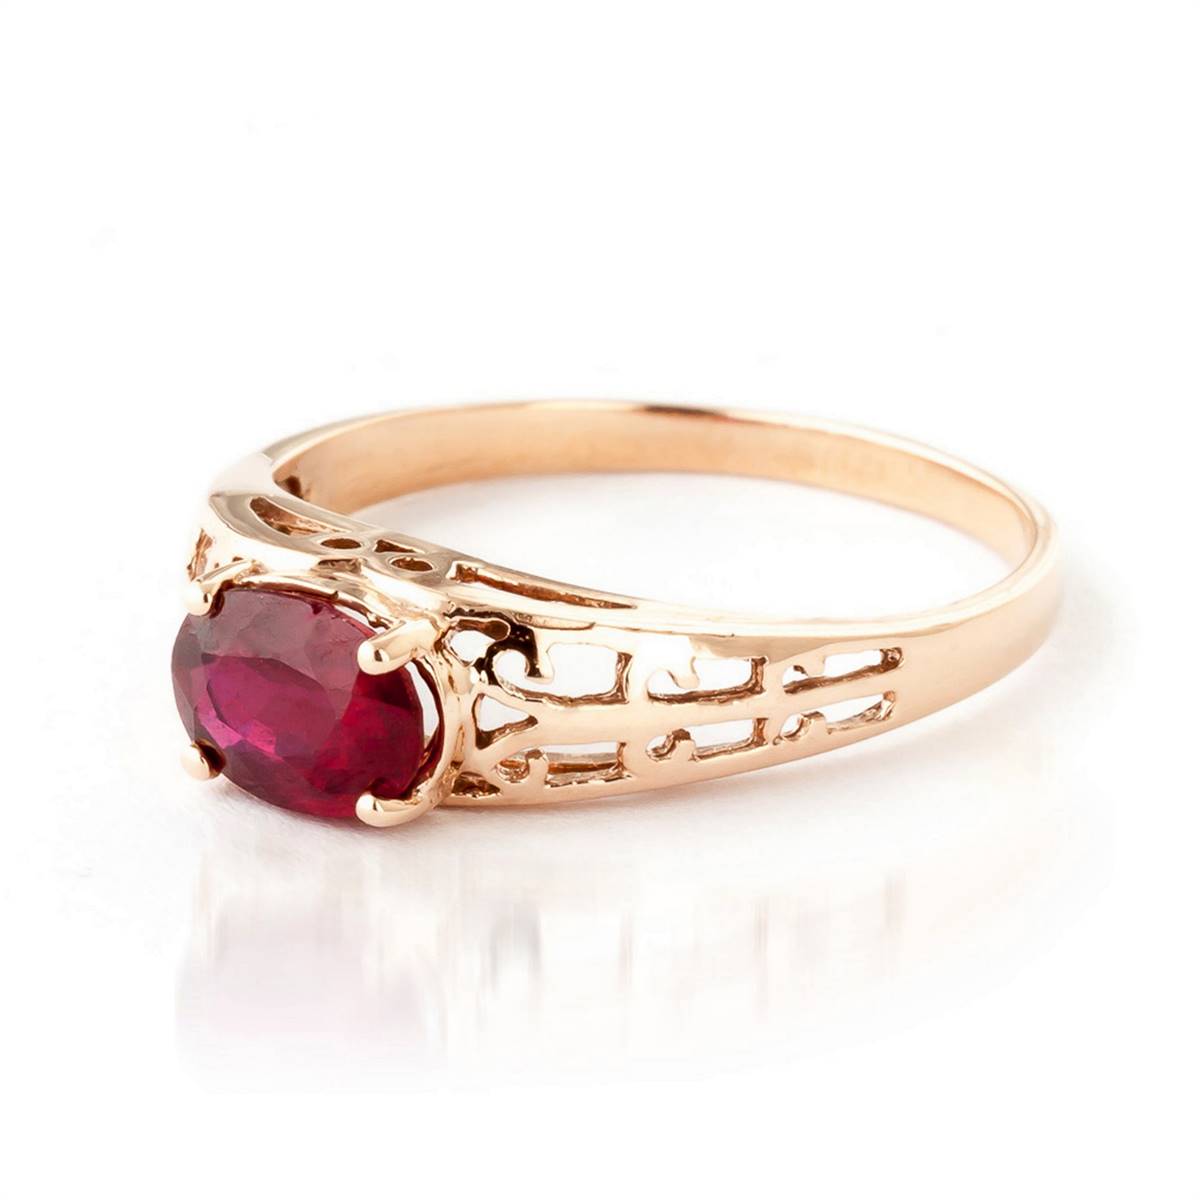 14K Solid Rose Gold Filigree Ring w/ Natural Ruby